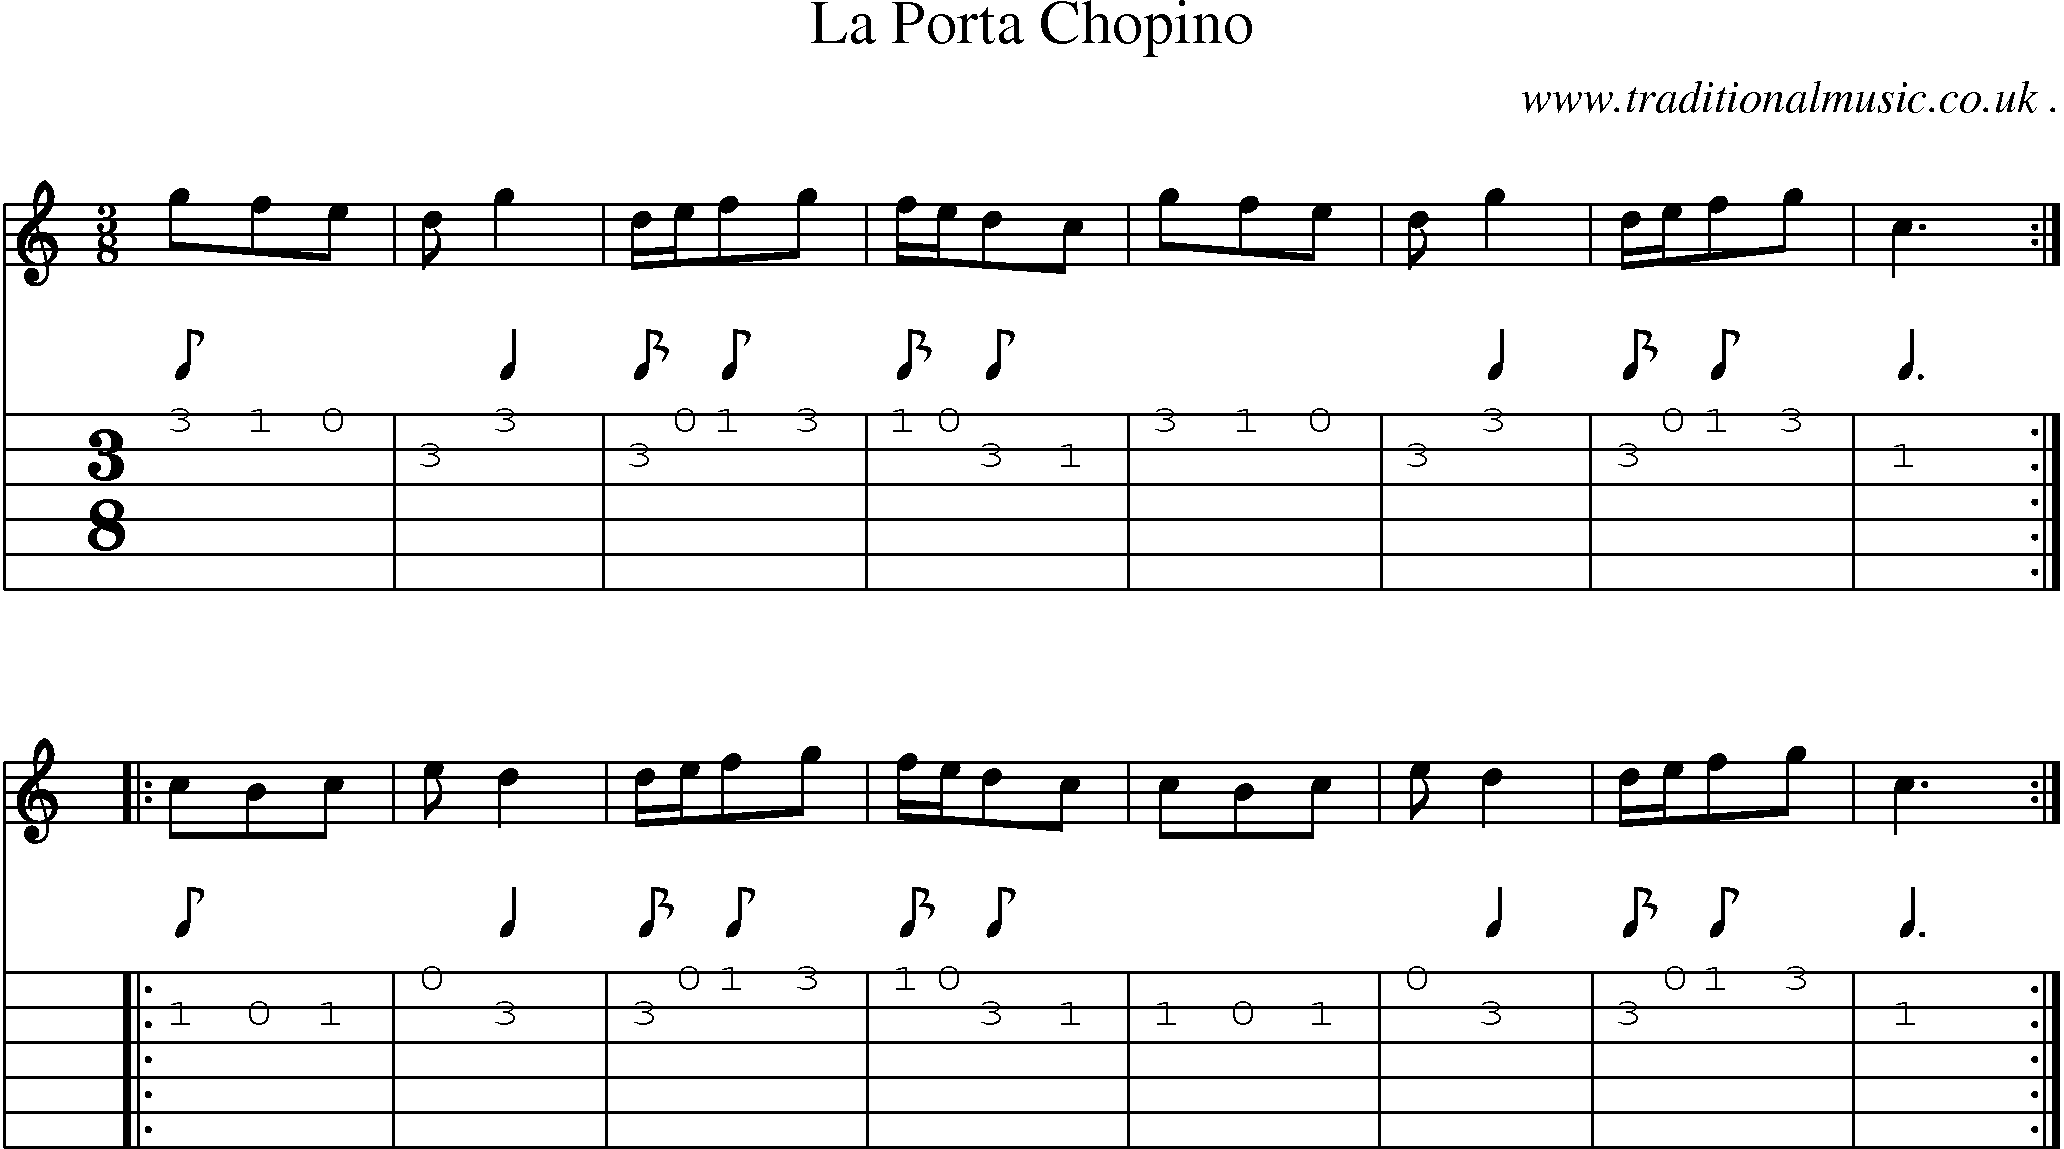 Sheet-Music and Guitar Tabs for La Porta Chopino